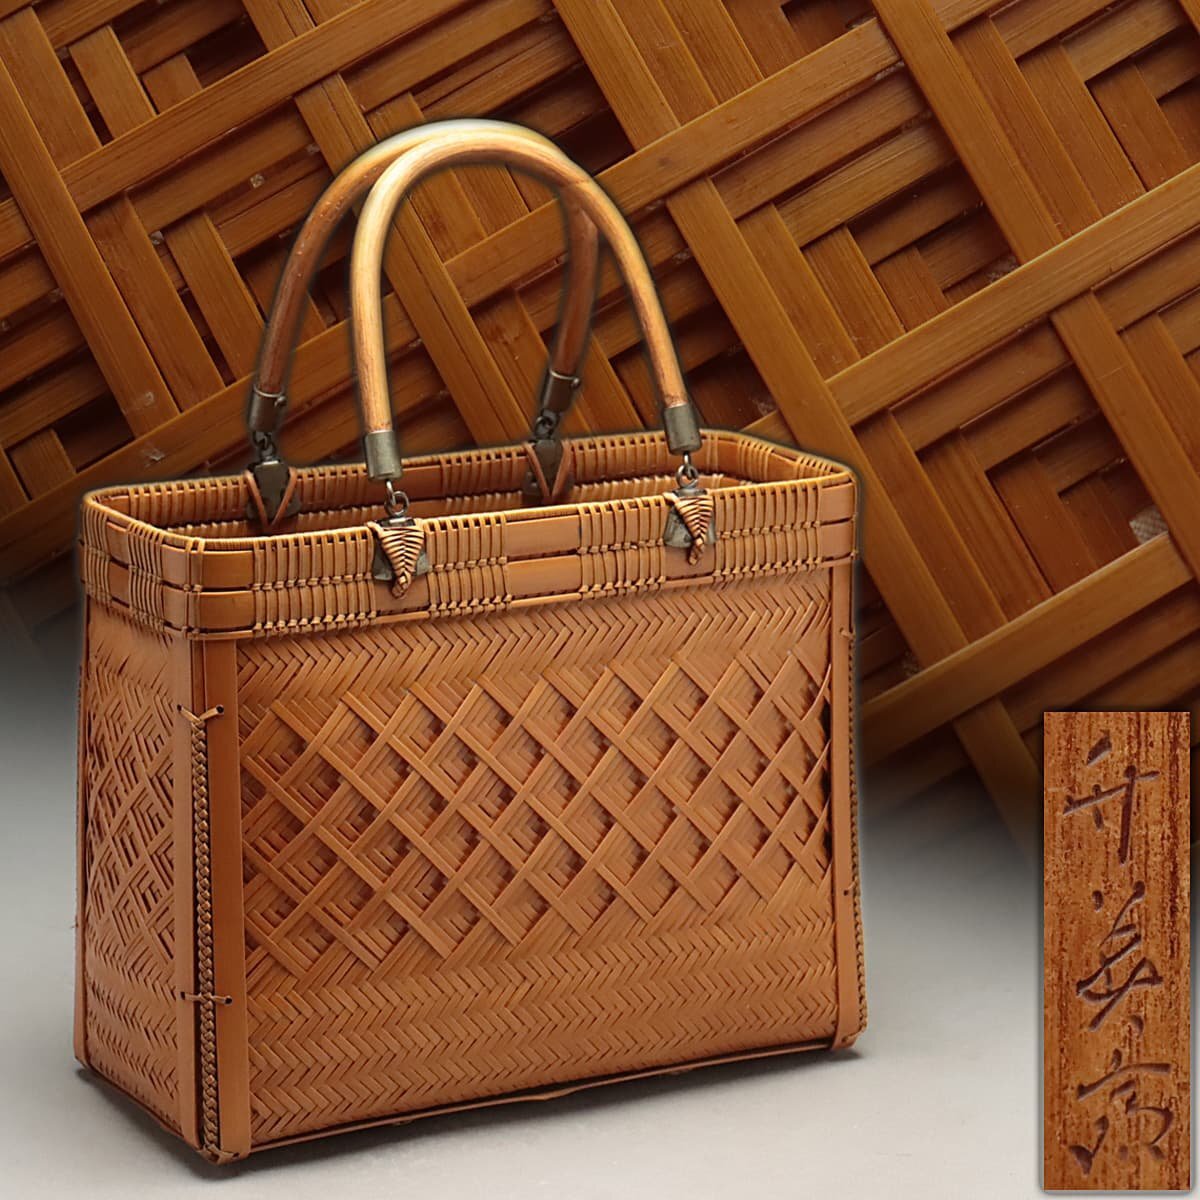 ER584 [ bamboo britain . work ] bamboo made piling braided basket back width 26.5cm -ply 420g* handbag back * bag tradition industrial arts 